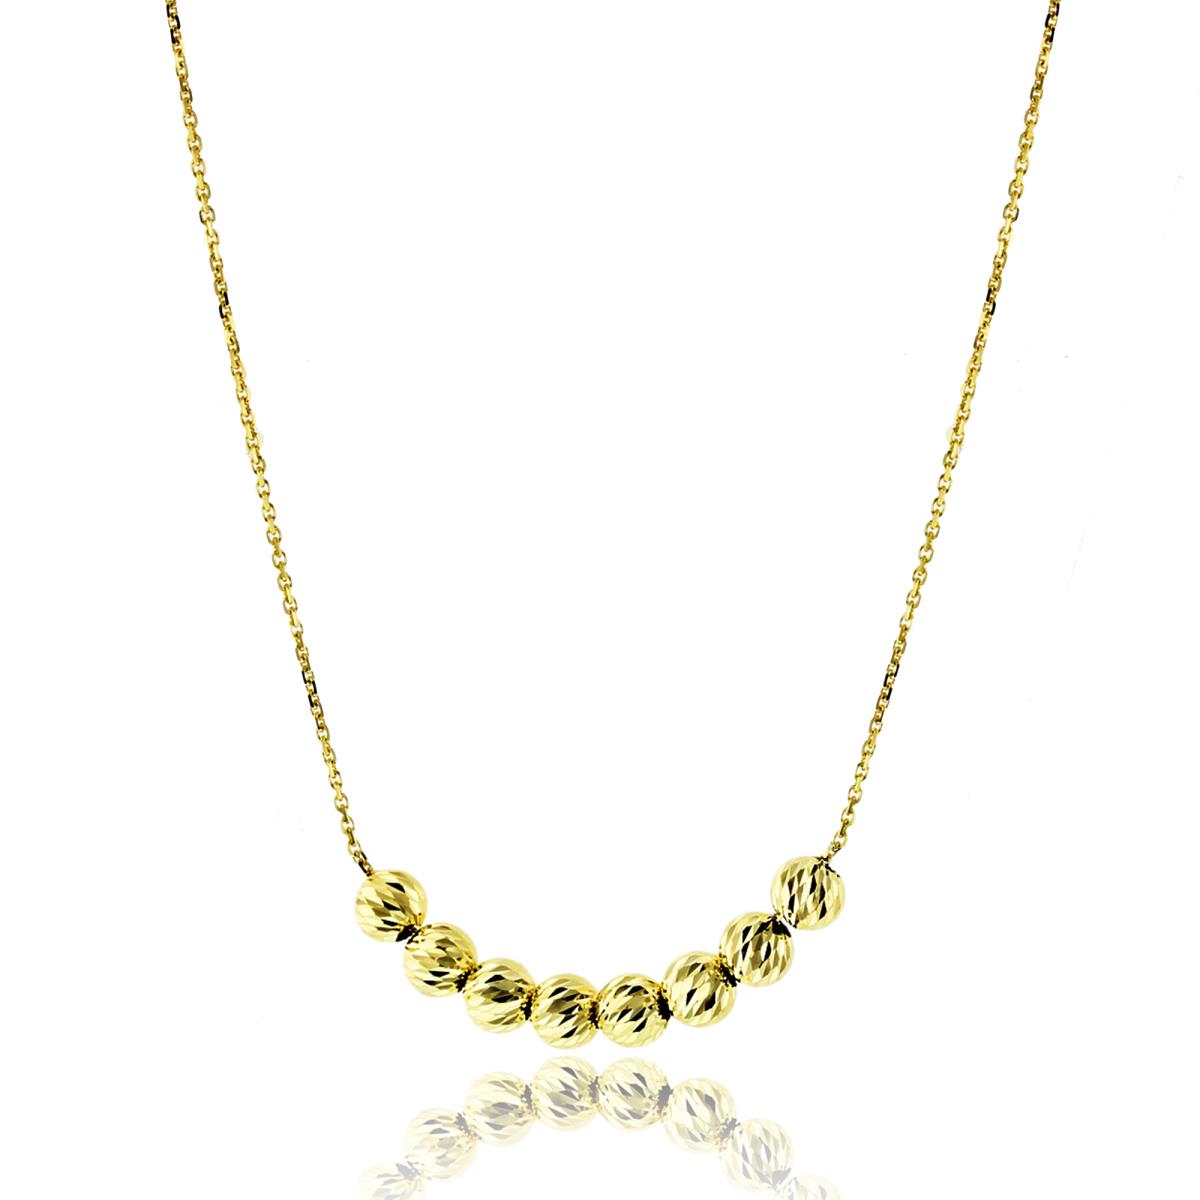 10K Yellow Gold 5mm Diamond Cut Beads 18" Necklace